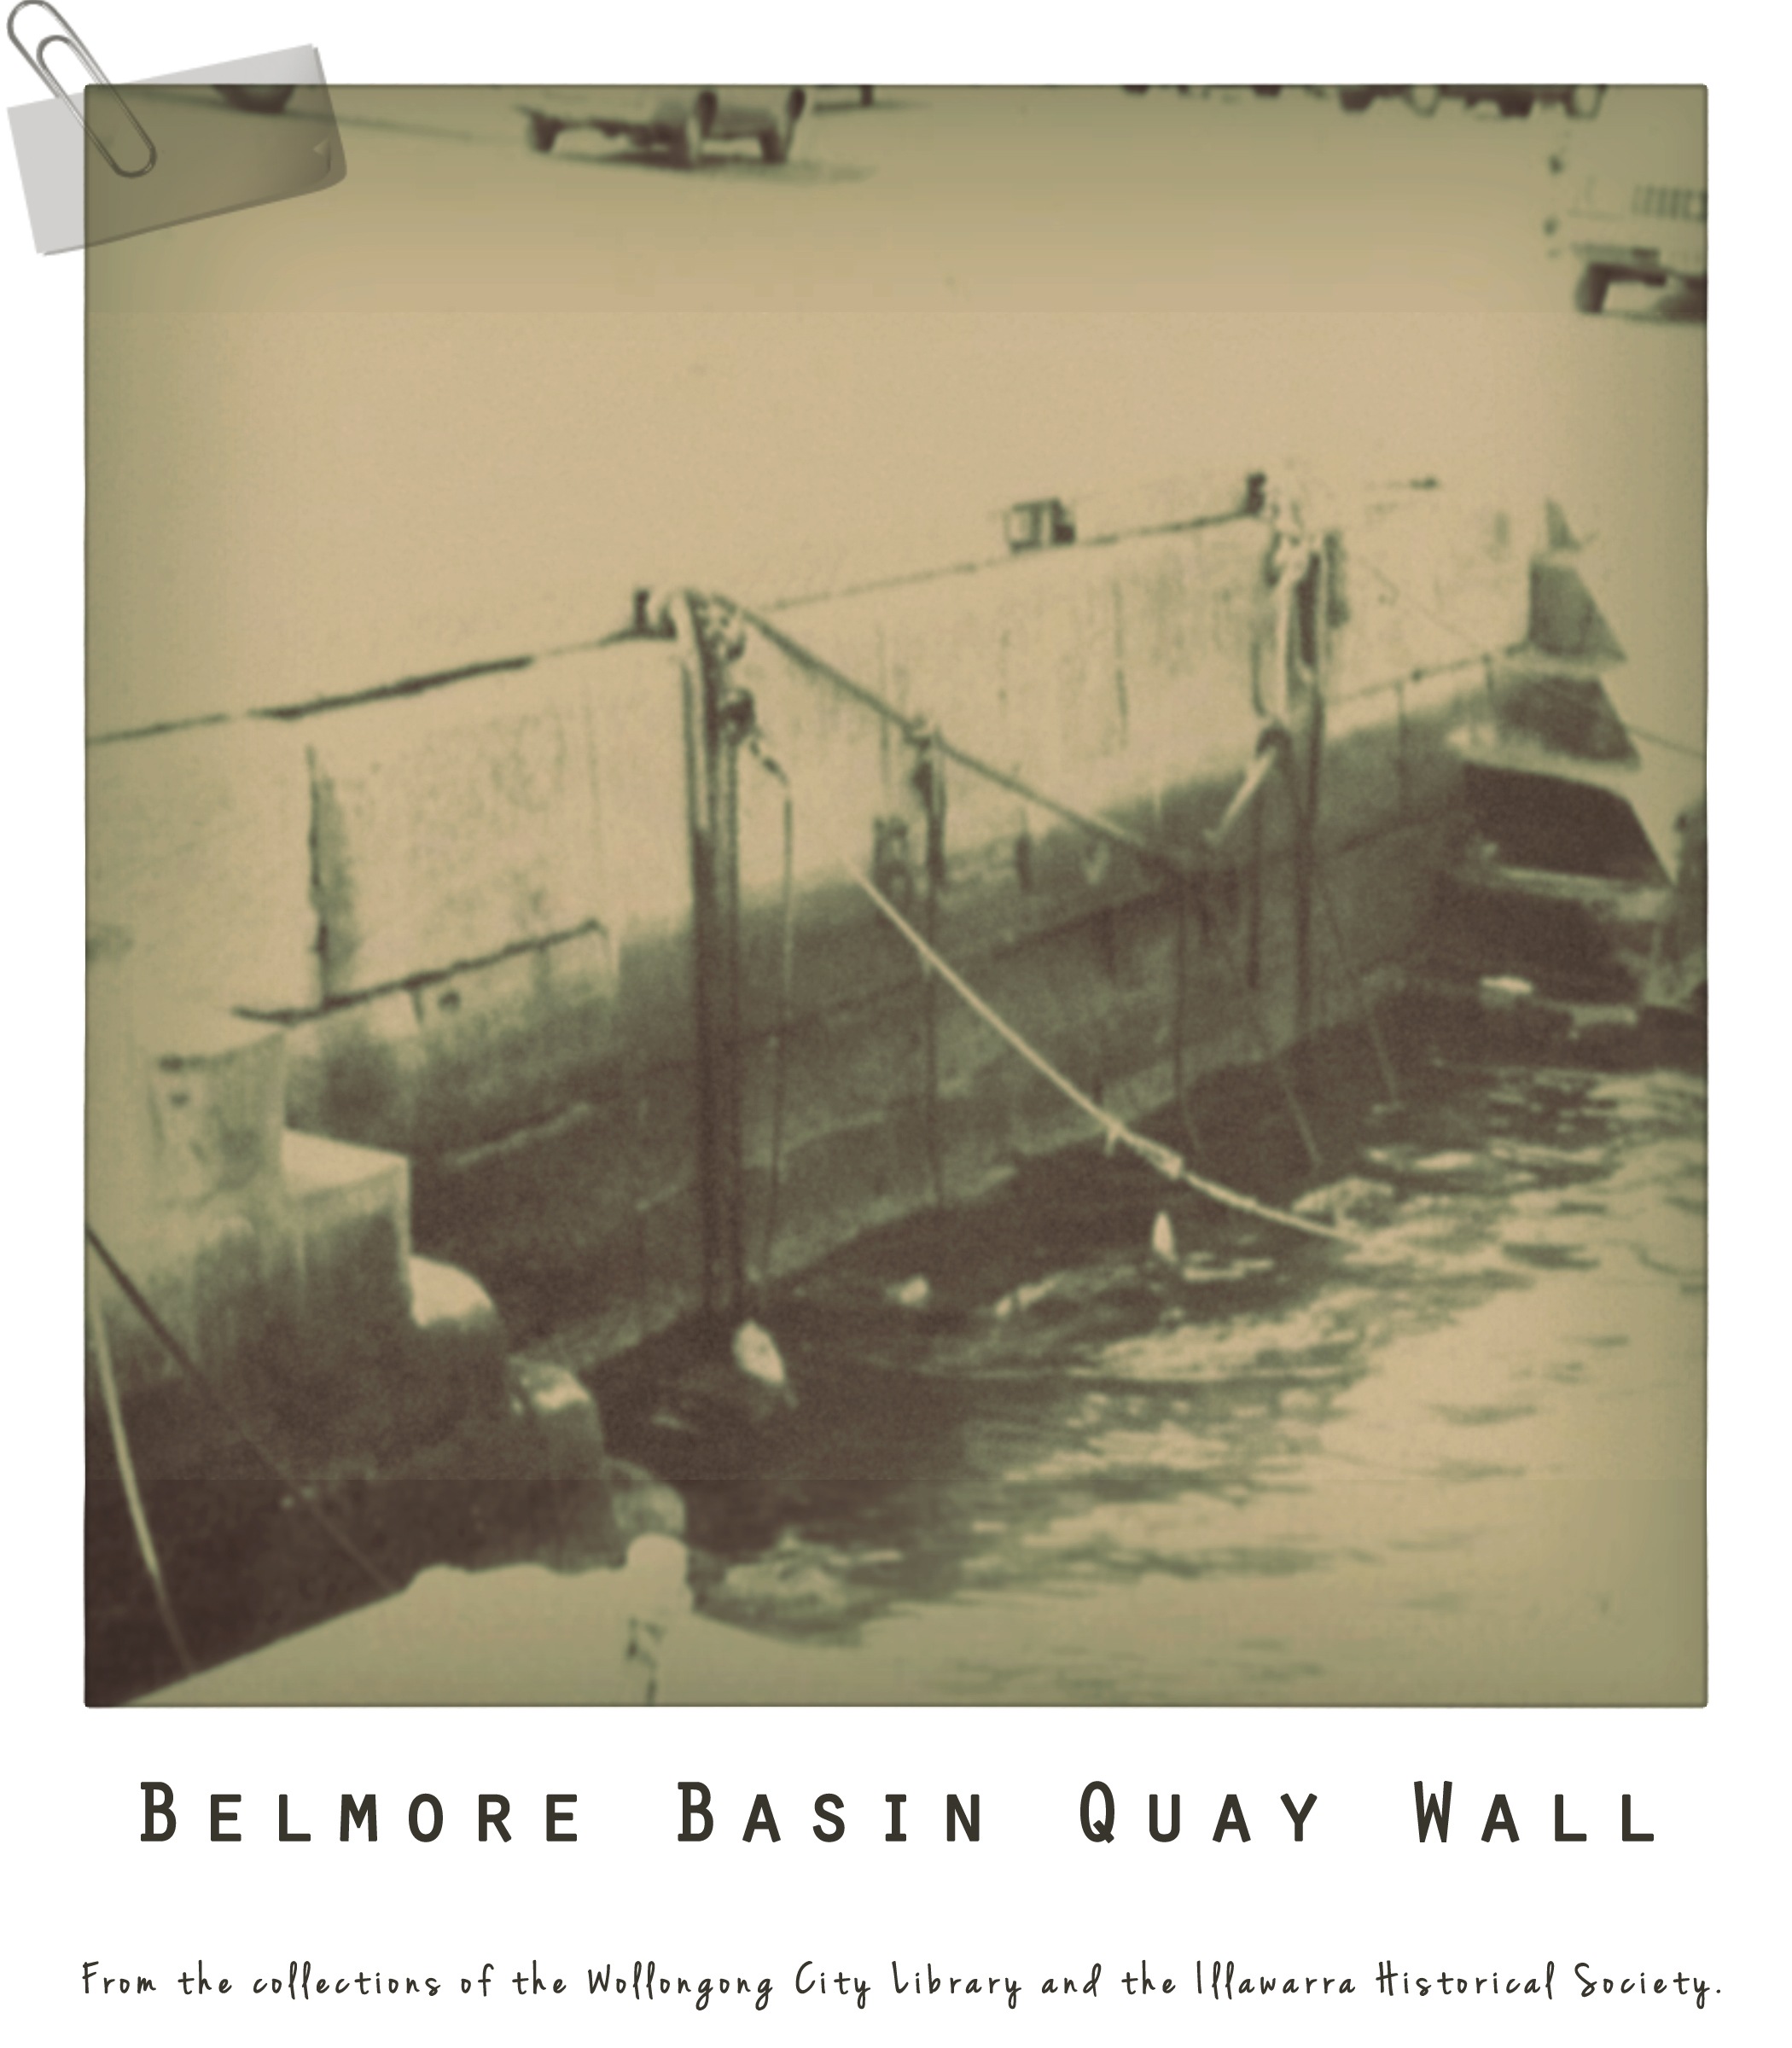 Belmore Basin Quay Wall